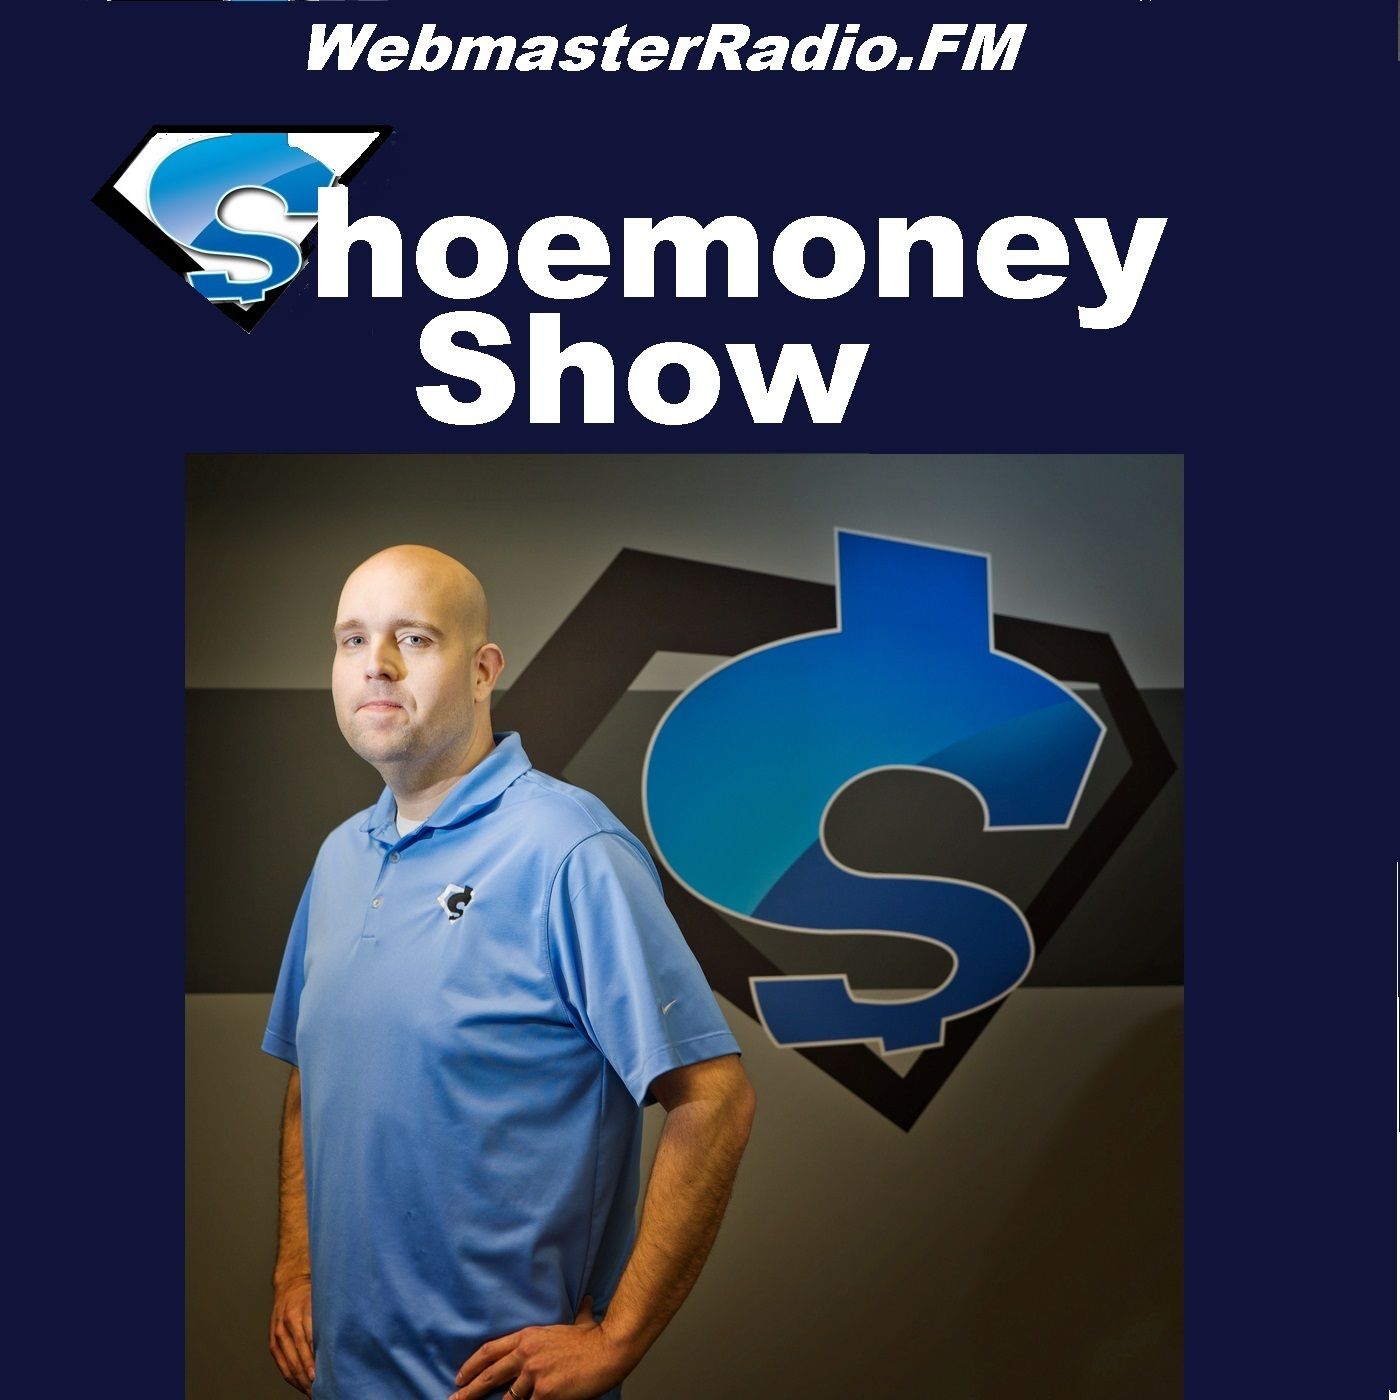 Shoemoney Shares Website Valuation Stories